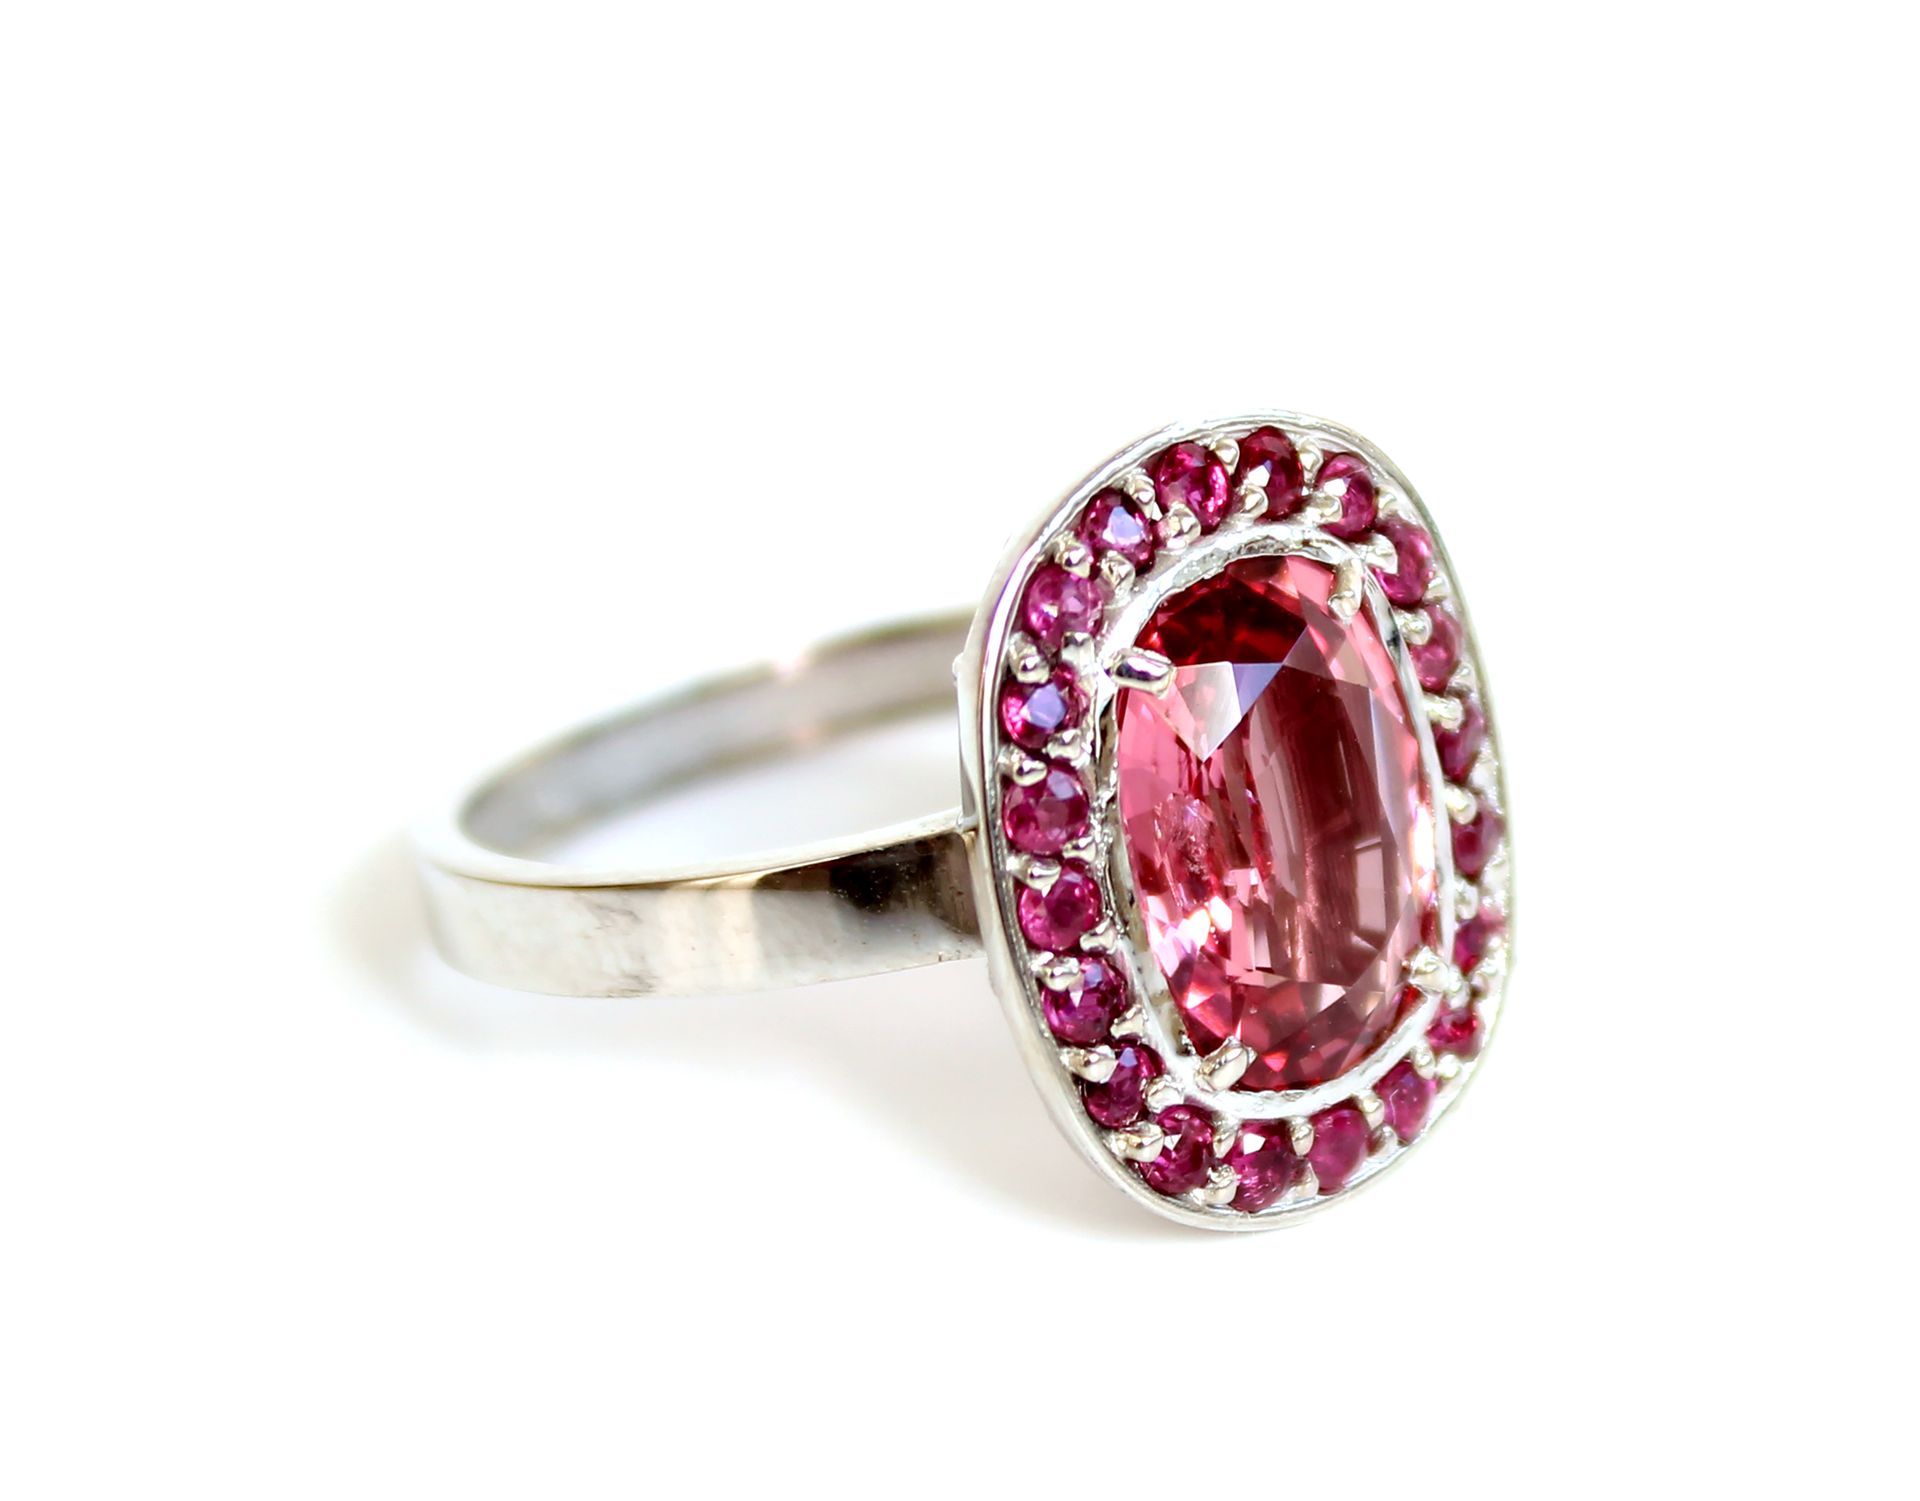 Null 18K（千分之七十五）白金戒指，镶嵌着一颗重达2.83克拉的缅甸粉色尖晶石，并镶嵌着刻面的圆形粉红色蓝宝石
附有瑞士GFCO宝石实验室证书
手指大小：&hellip;